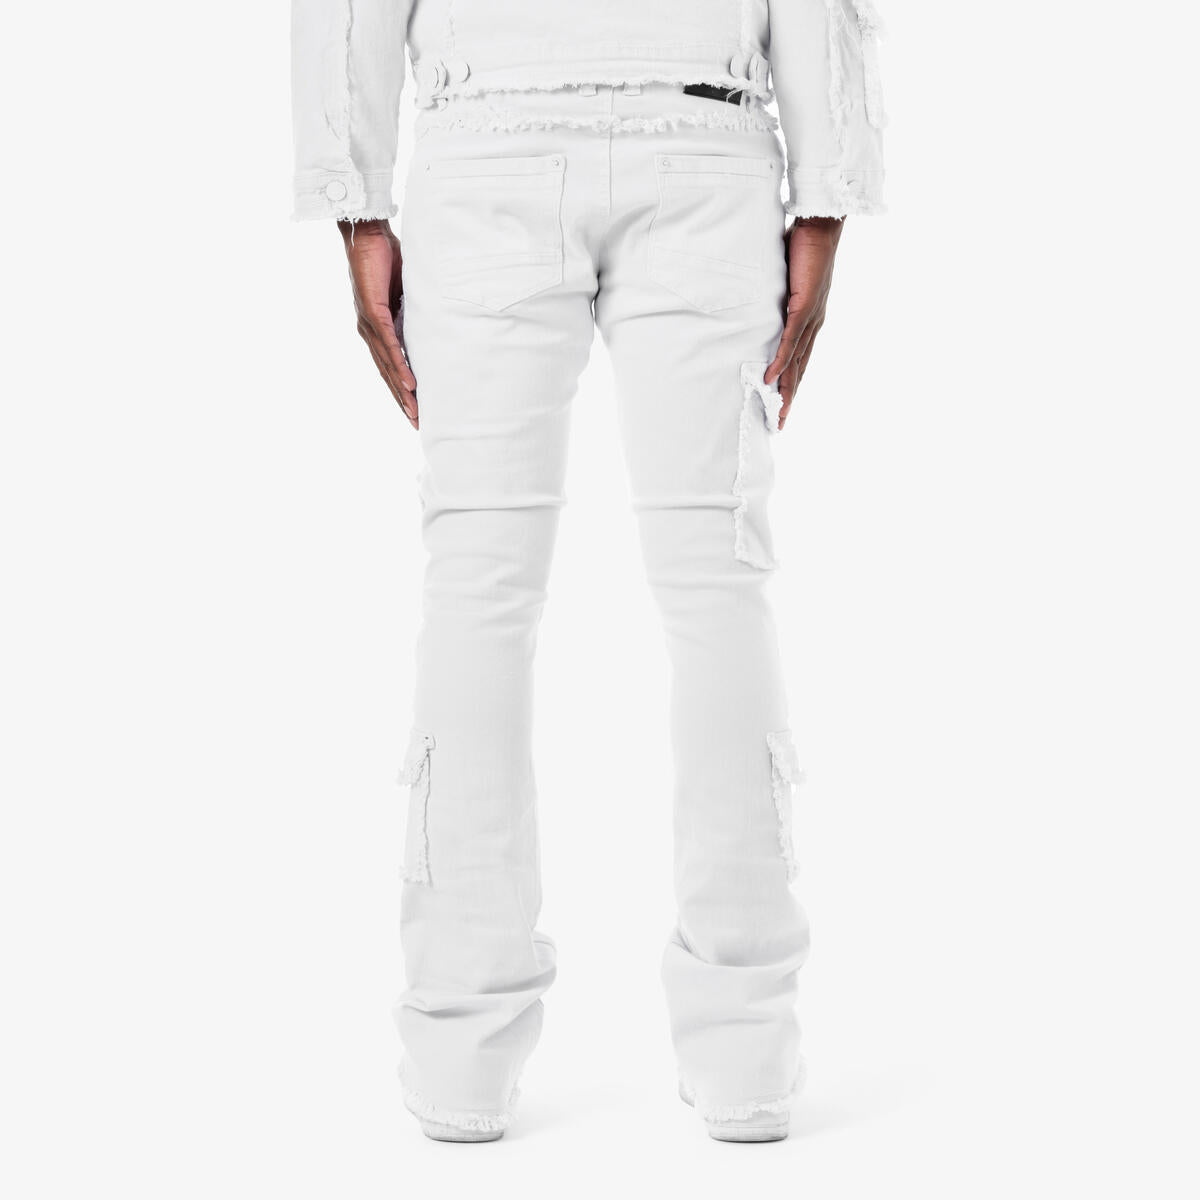 Copper Rivet White Multi Pockets Stacked Flare White Denim Jeans